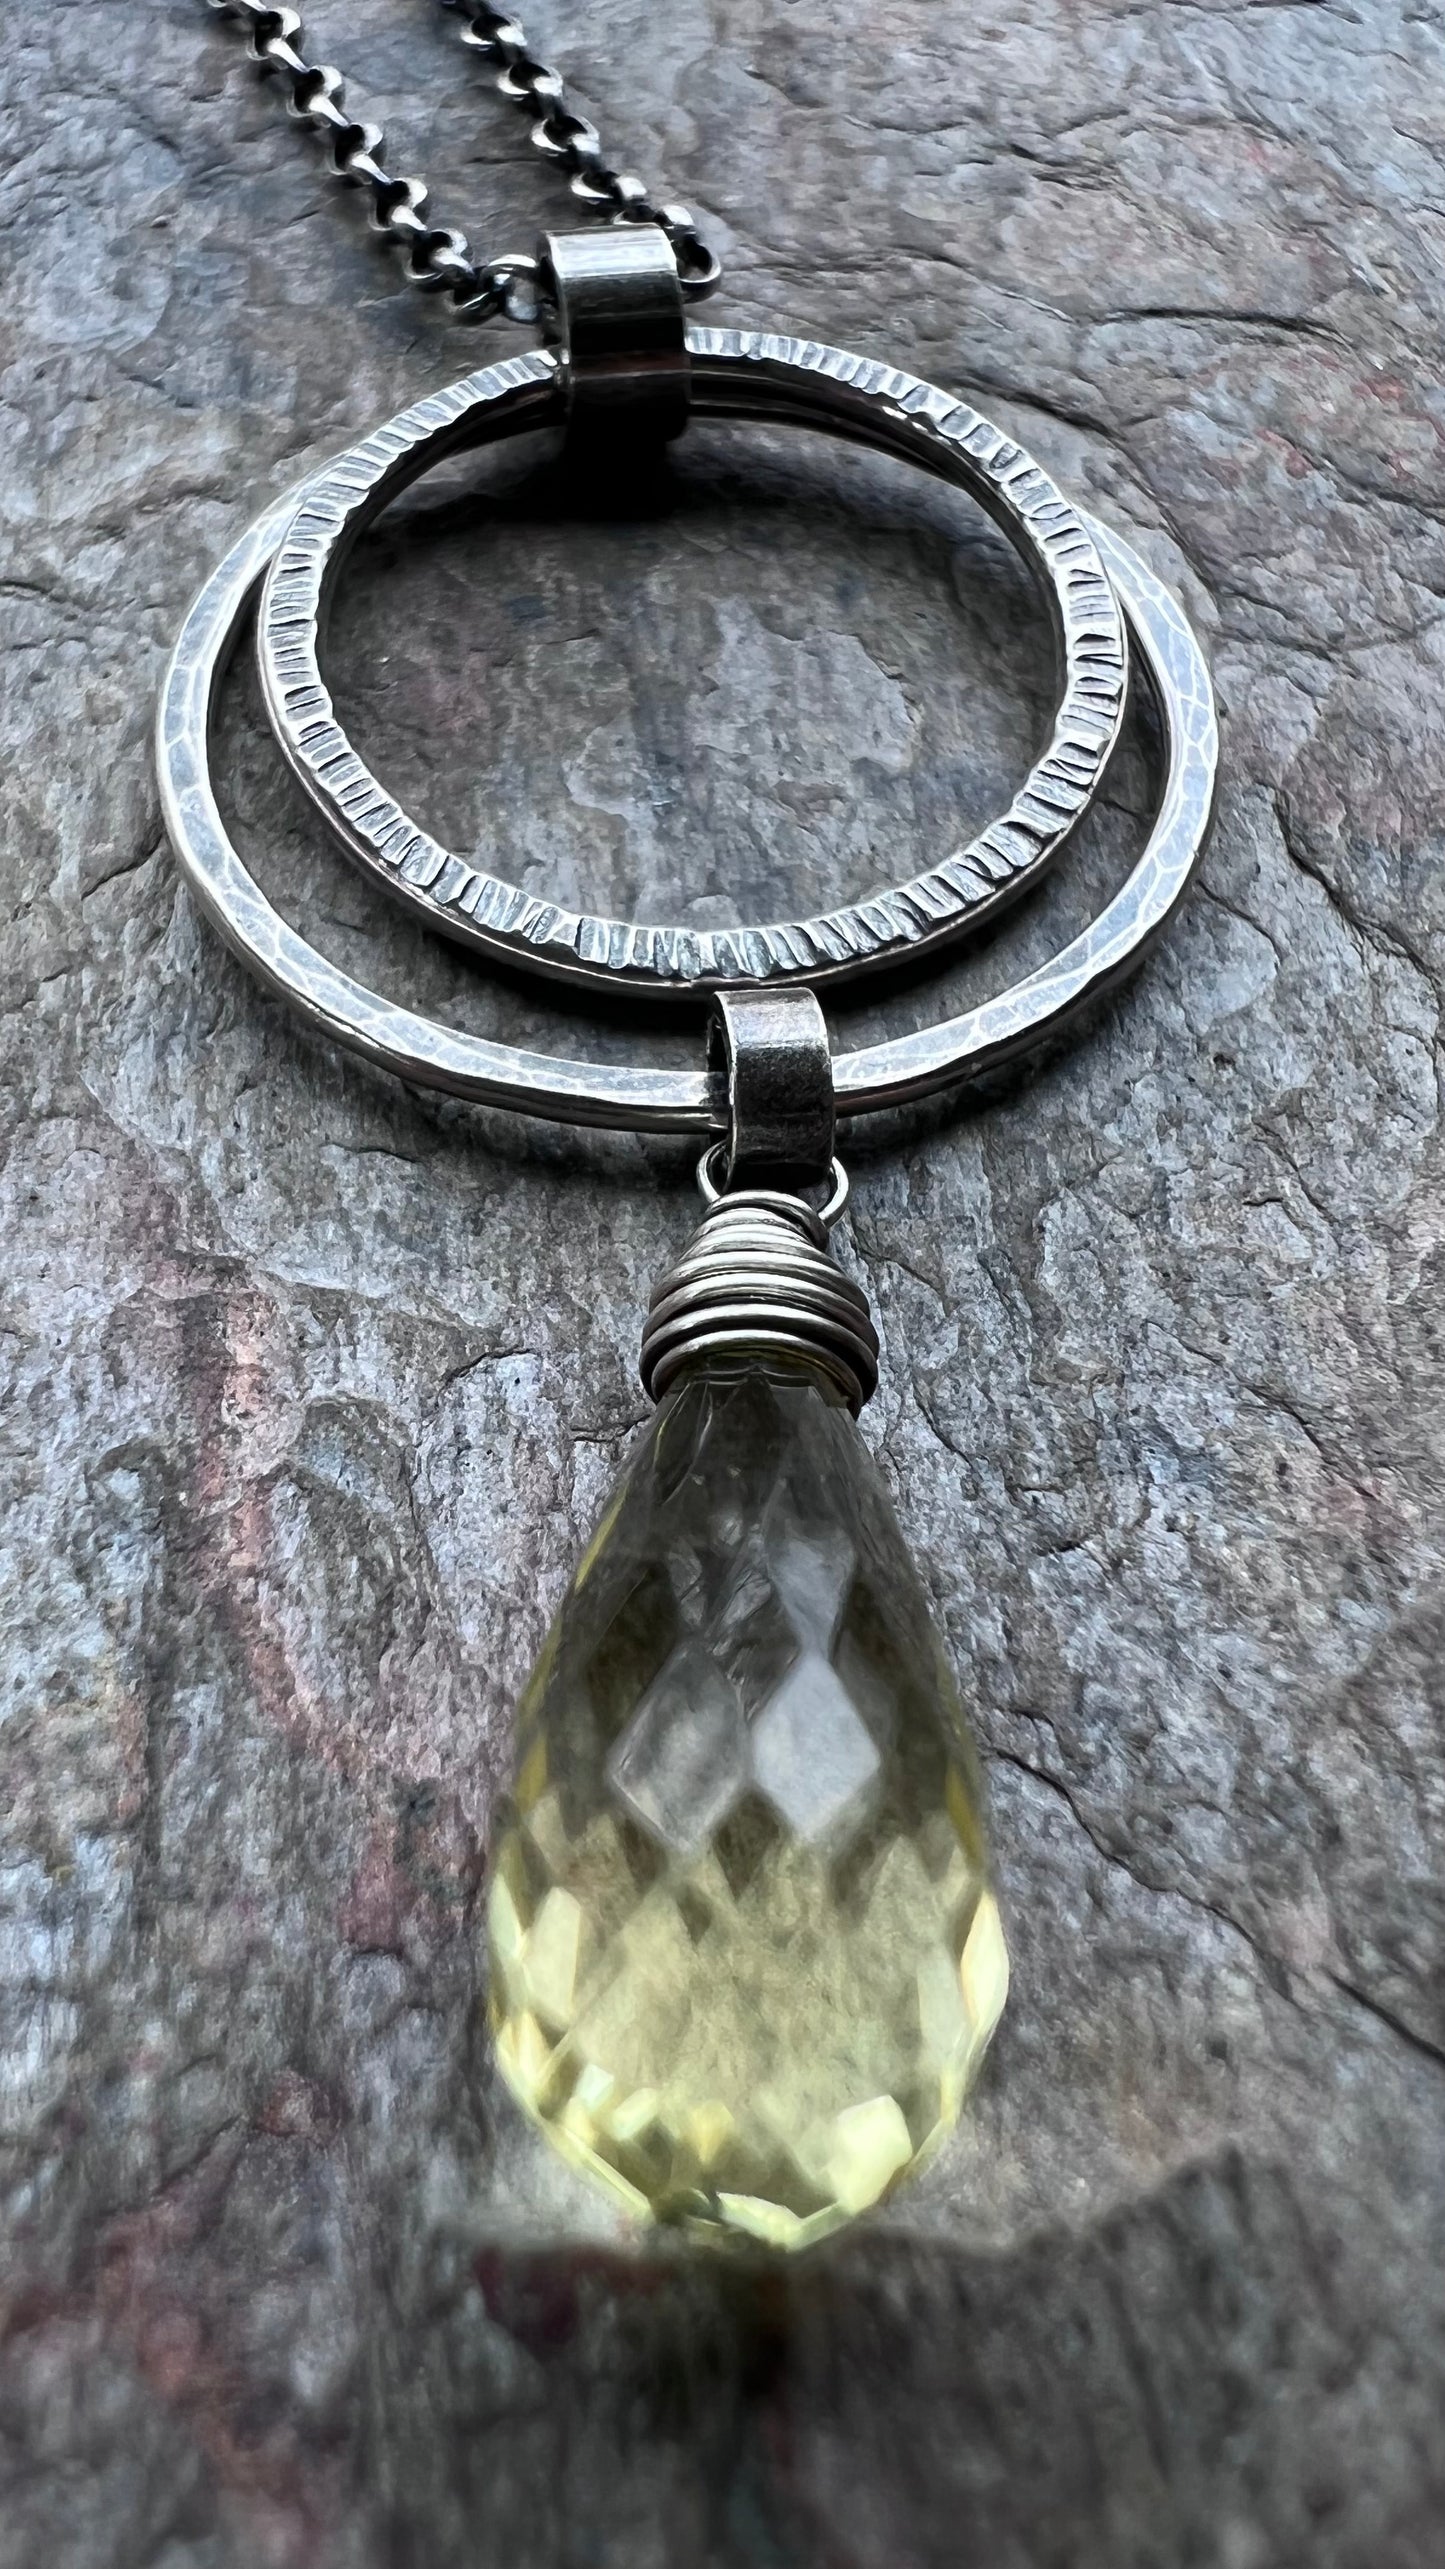 Lemon Topaz Sterling Silver Necklace - Genuine Lemon Topaz and Sterling Silver Rings Pendant on Sterling Silver Chain